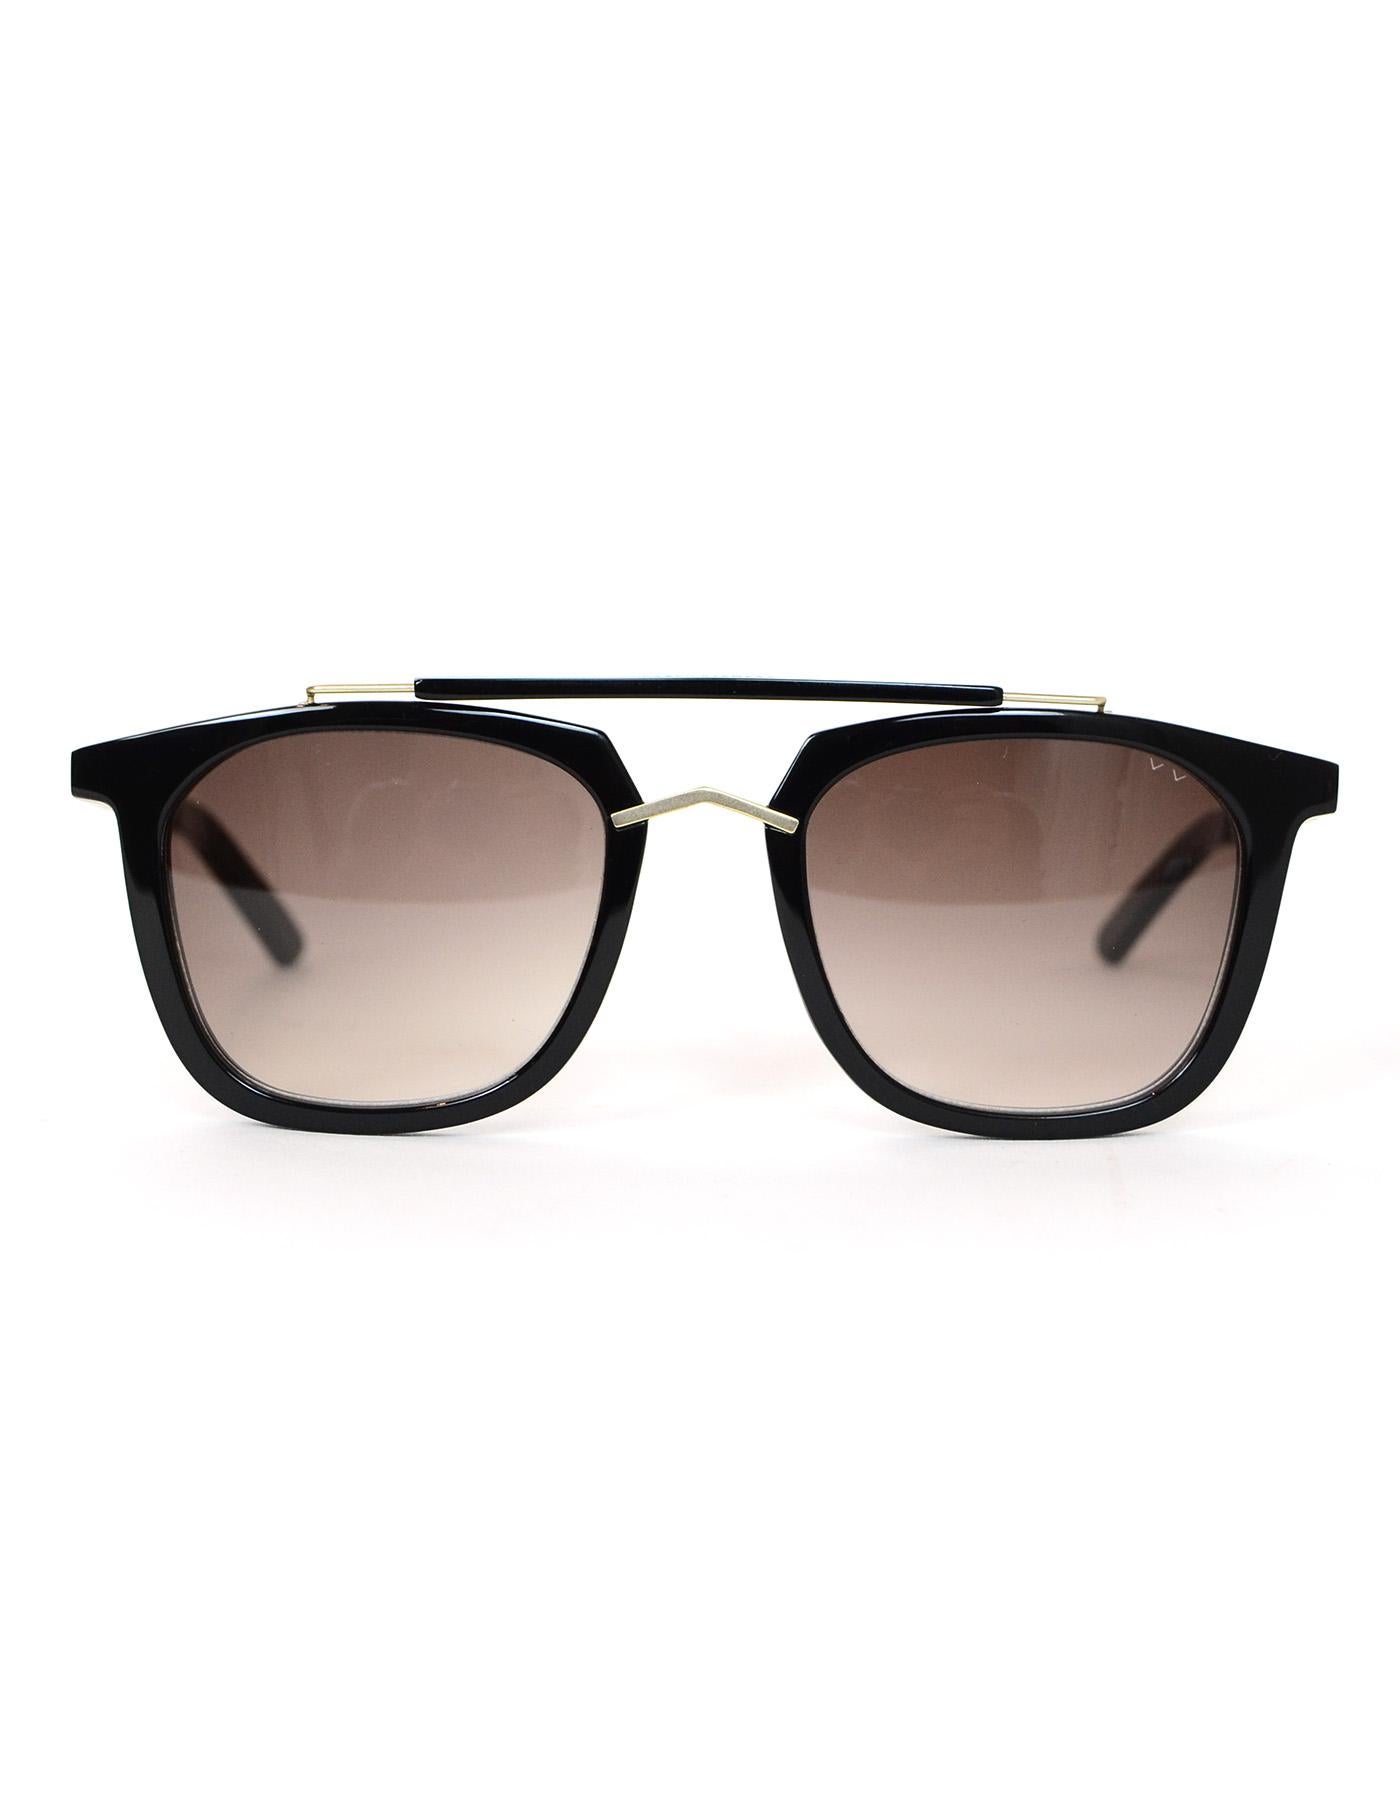 Women's Pared Black/Gold Camels & Caravans Aviator Sunglasses w/ Brown Lenses rt. $270